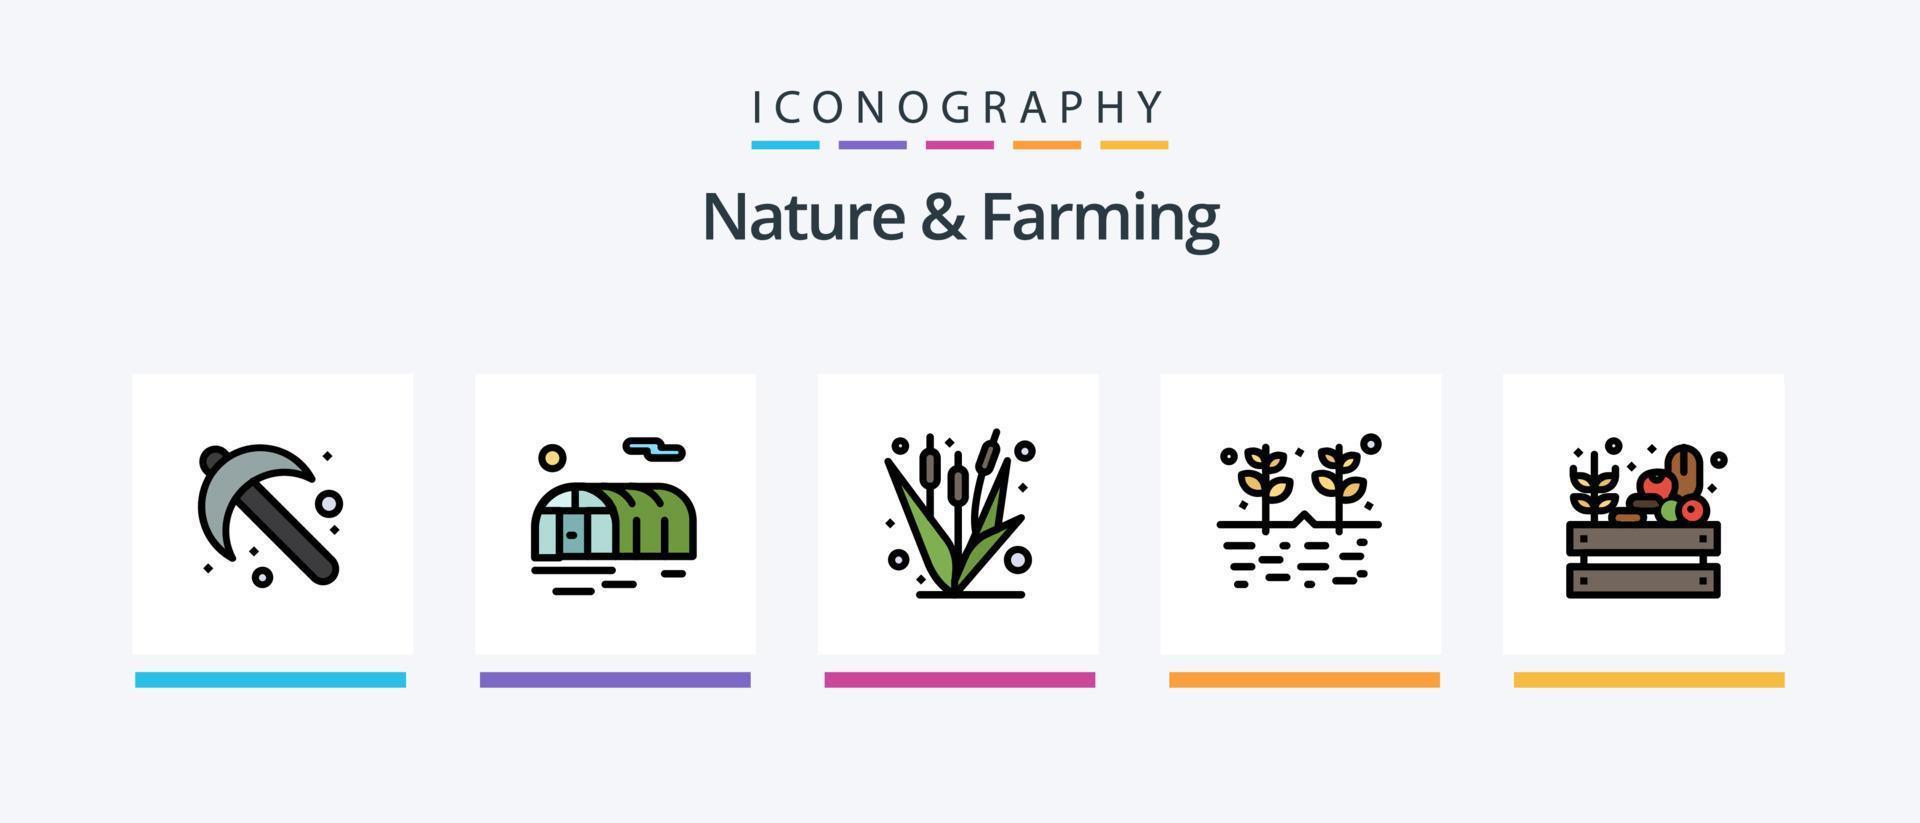 natur och jordbruk linje fylld 5 ikon packa Inklusive jordbruk. skörda. lantbruk. mat. odla. kreativ ikoner design vektor